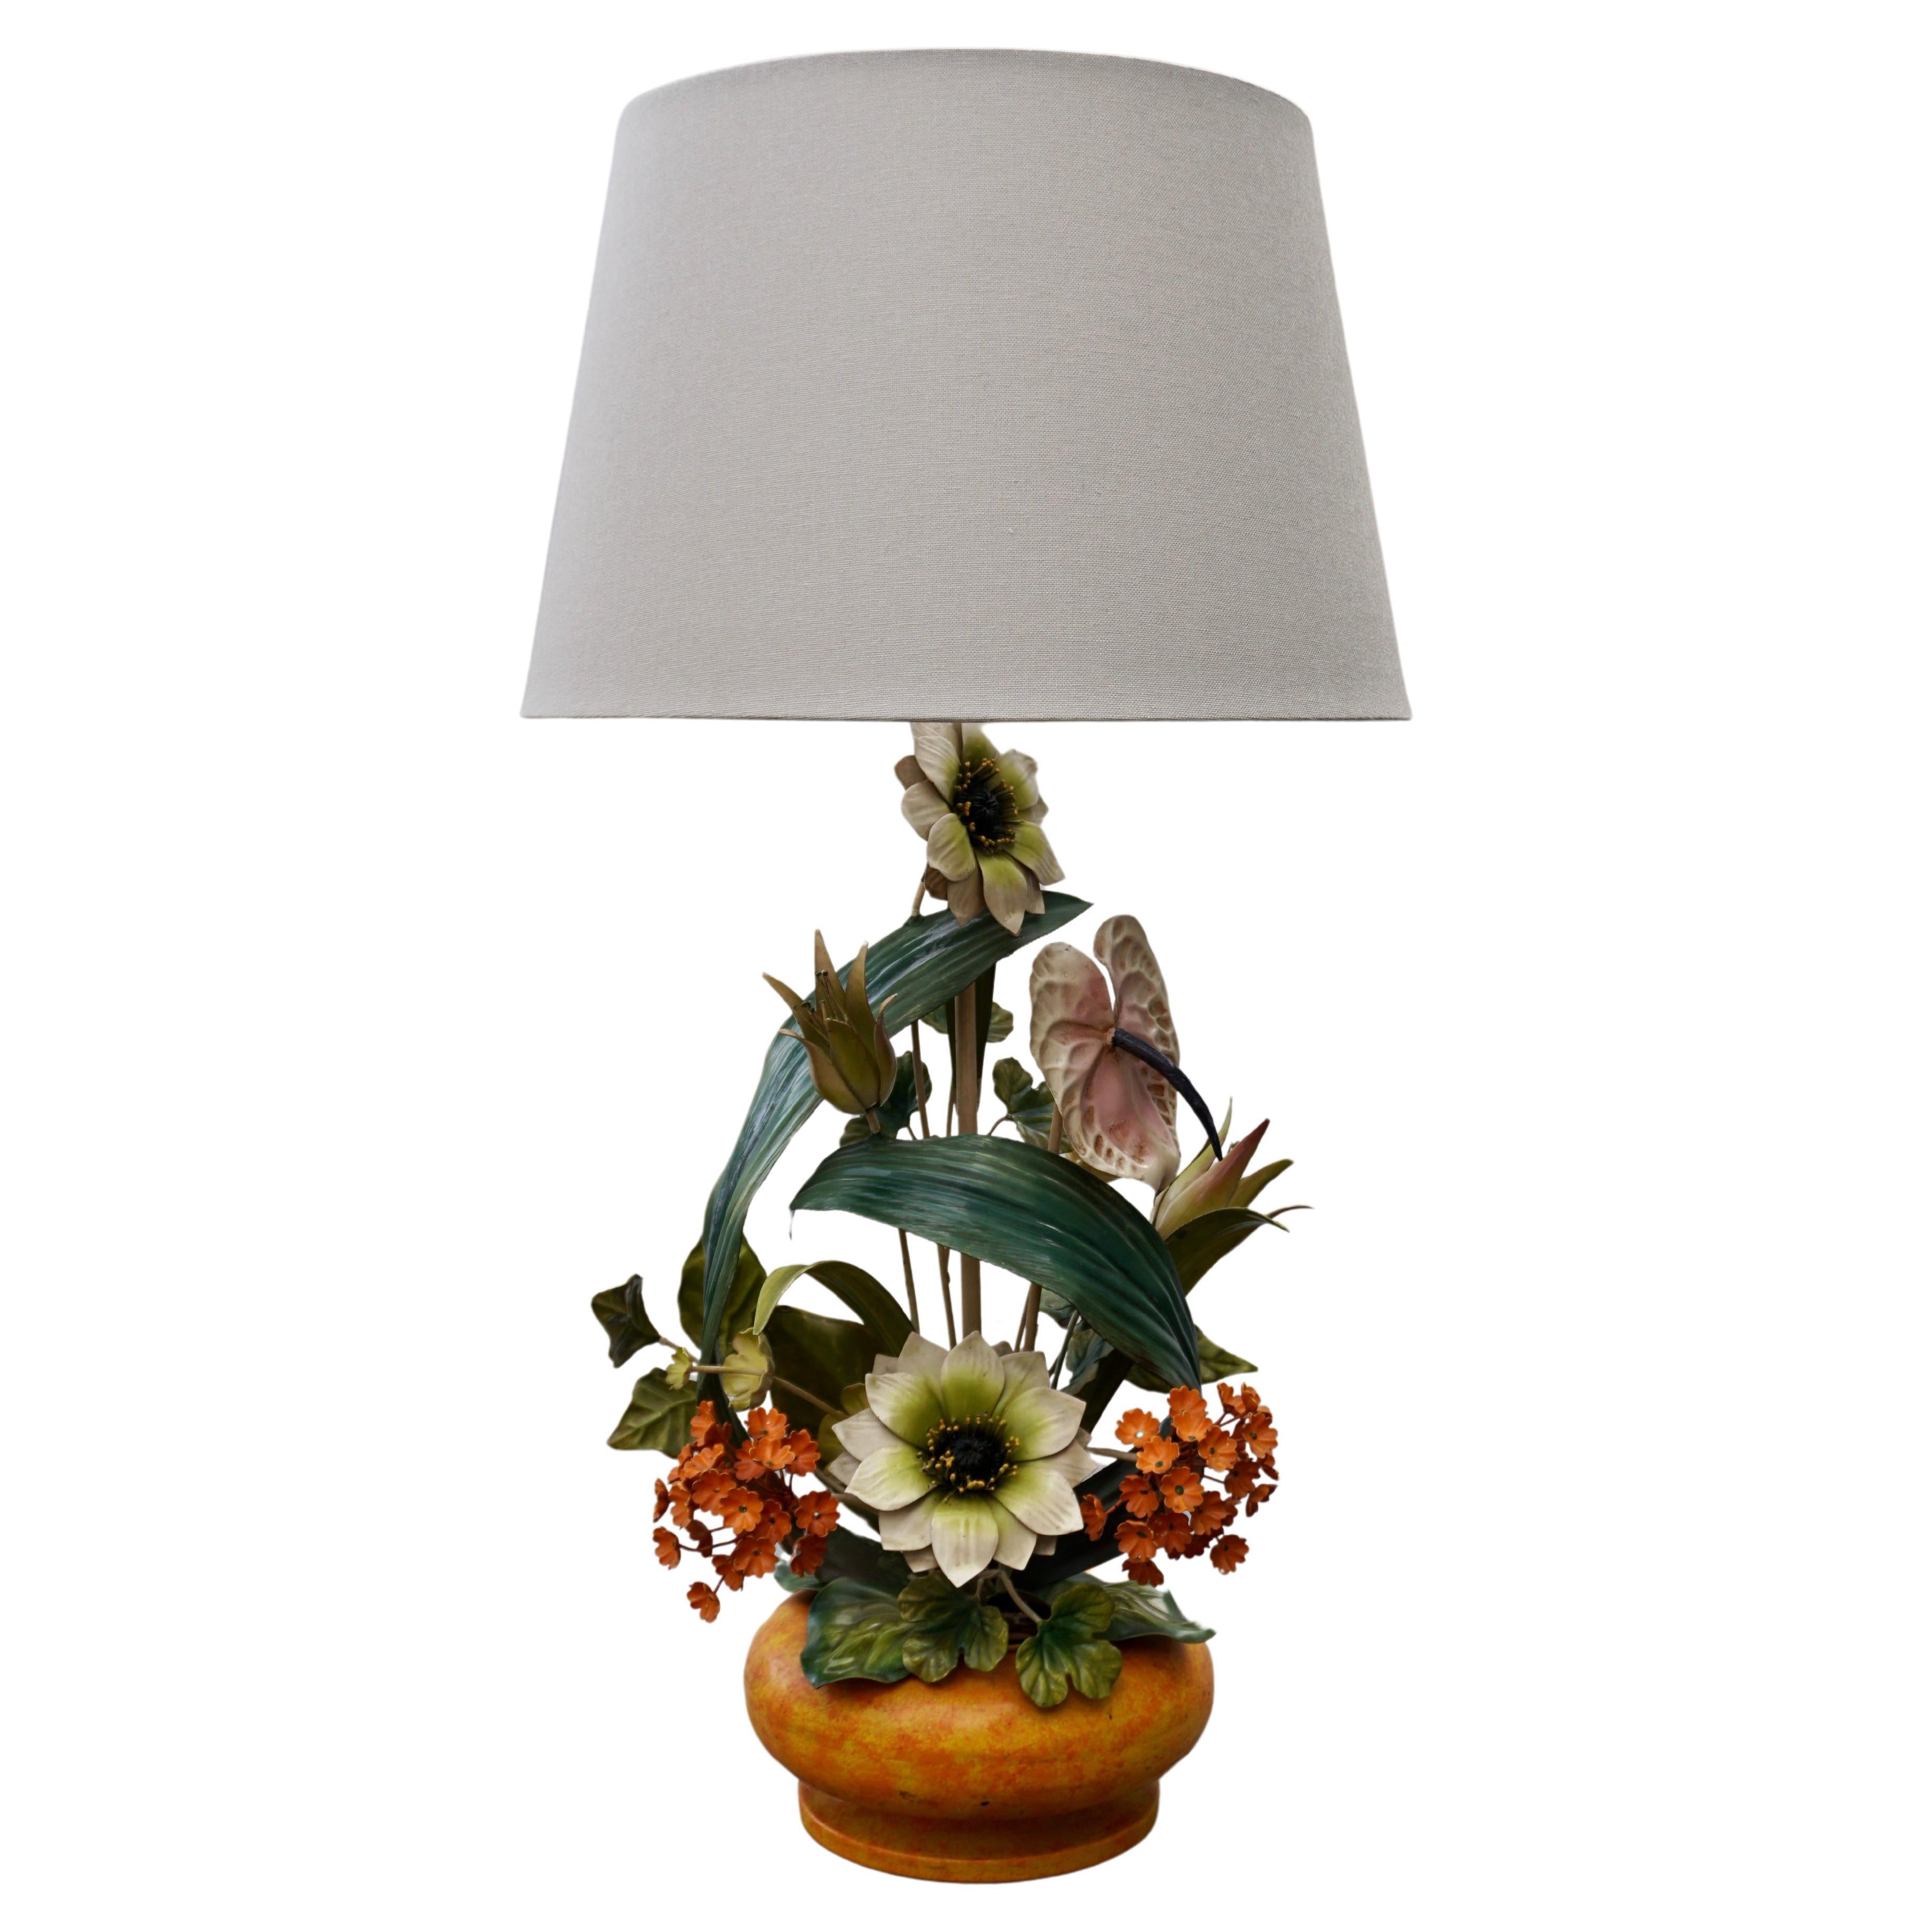 Vintage Tole Toleware Metal Art Flower Petite Lamp Italy Shabby Chic en vente